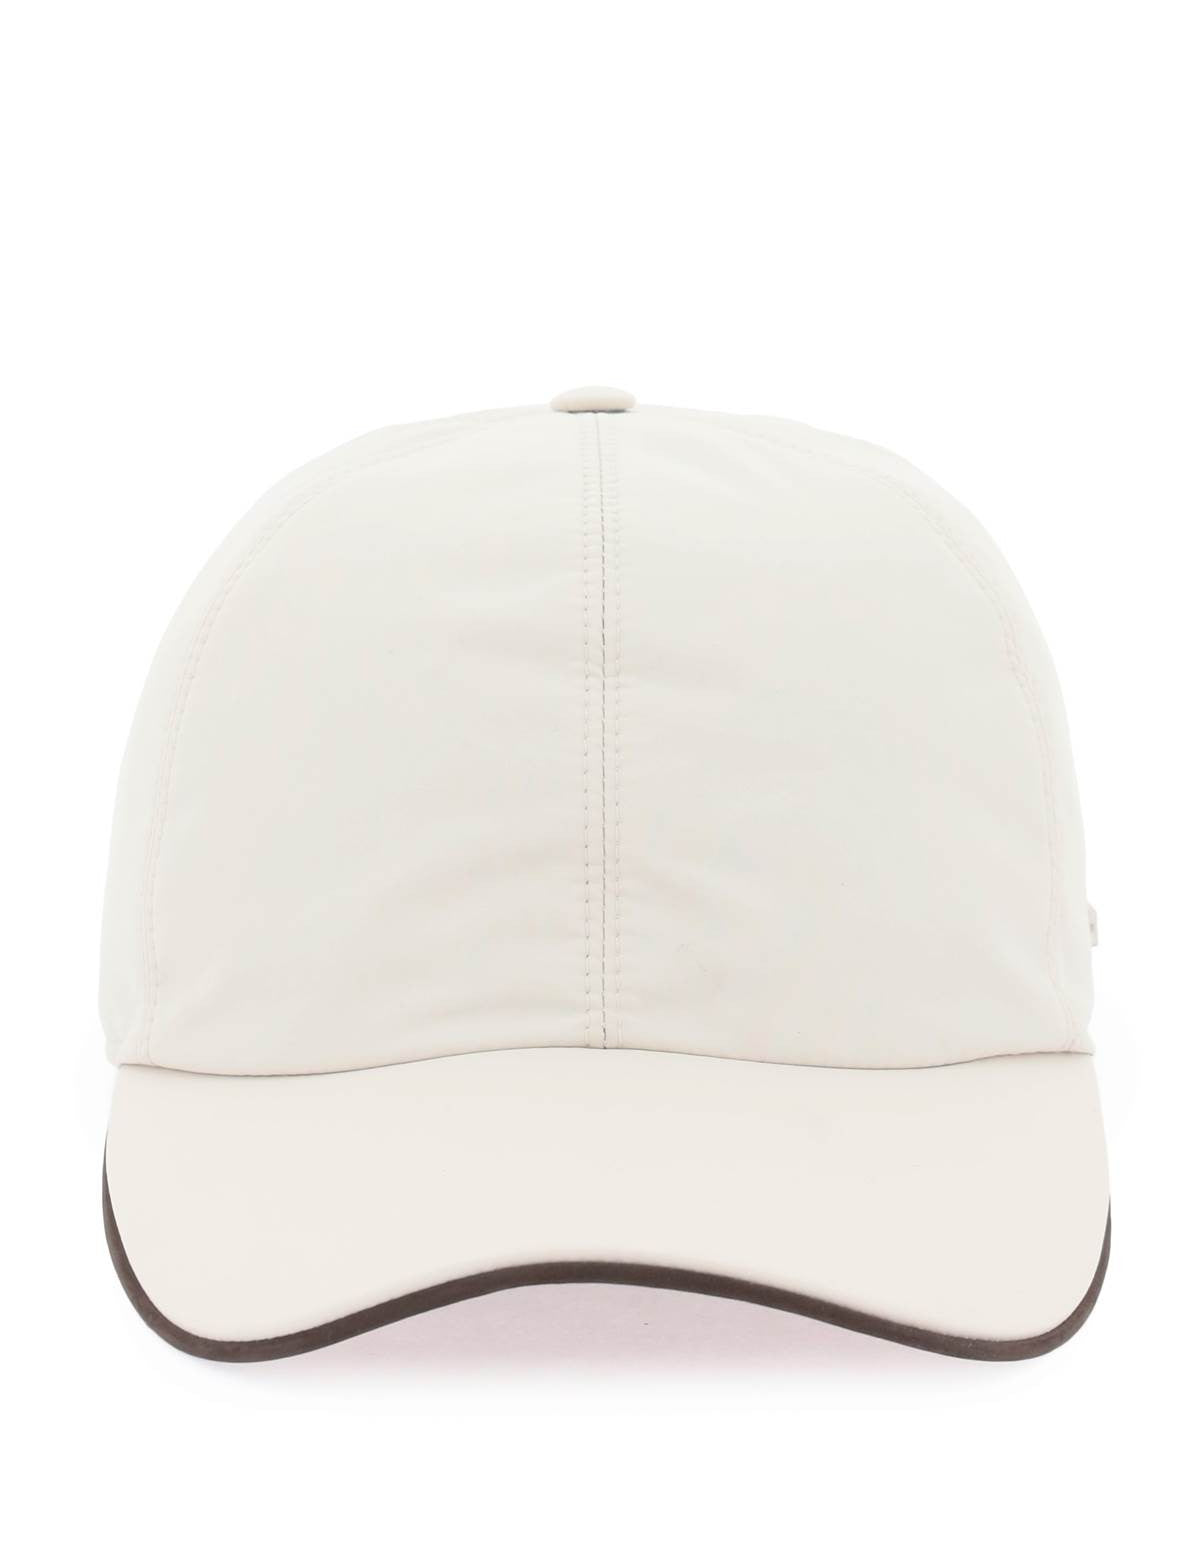 zegna-baseball-cap-with-leather-trim.jpg